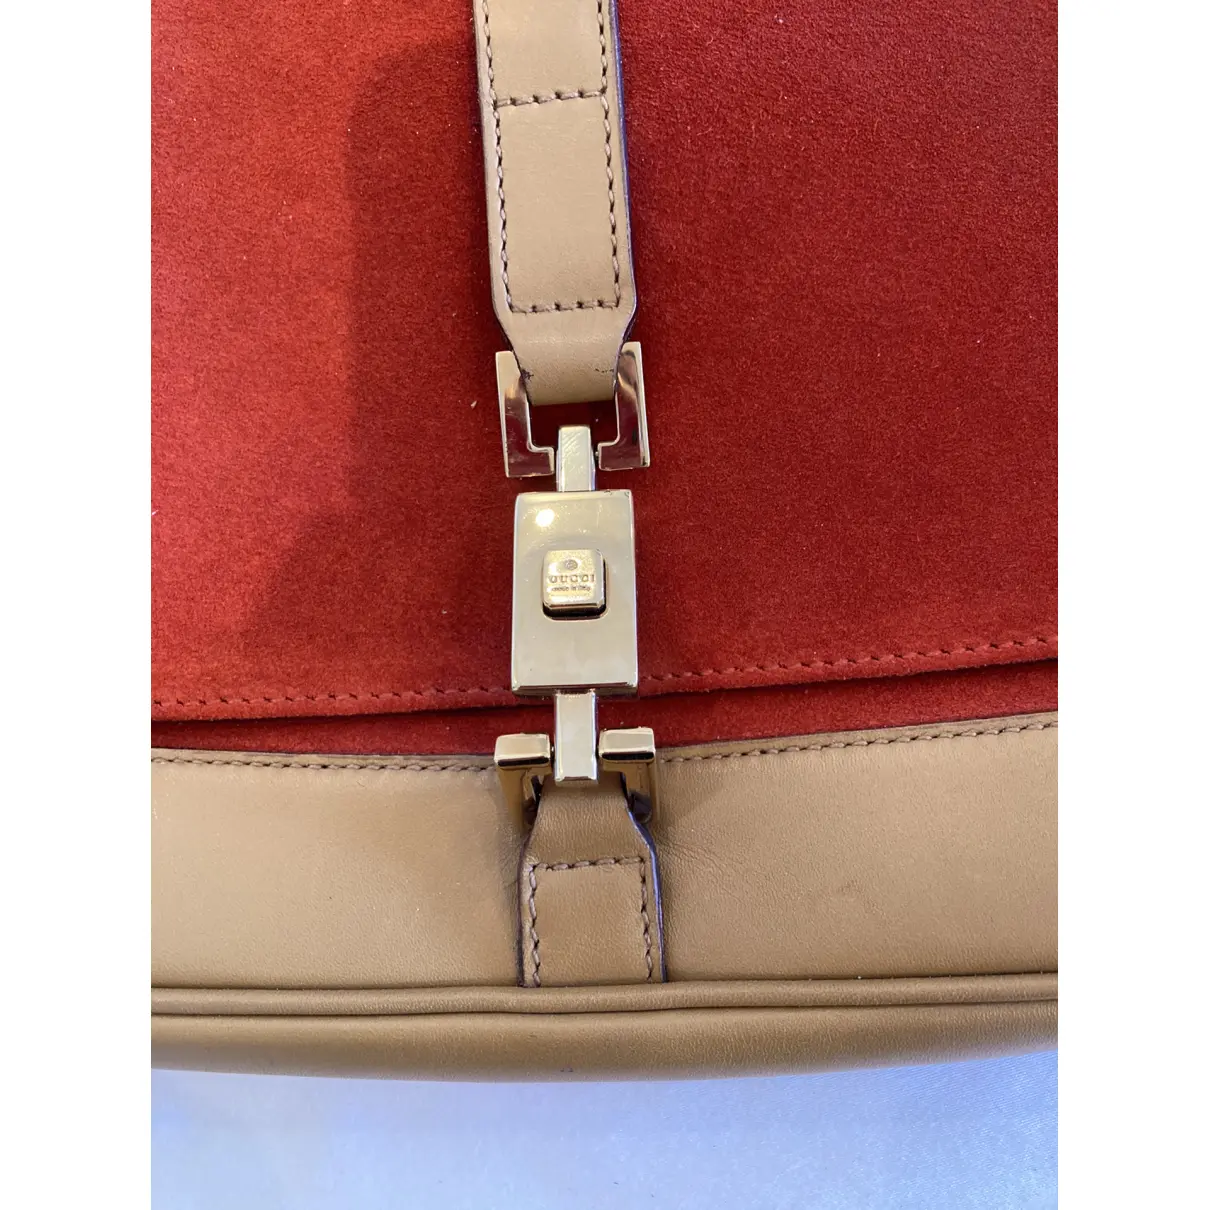 Buy Gucci Jackie Vintage leather handbag online